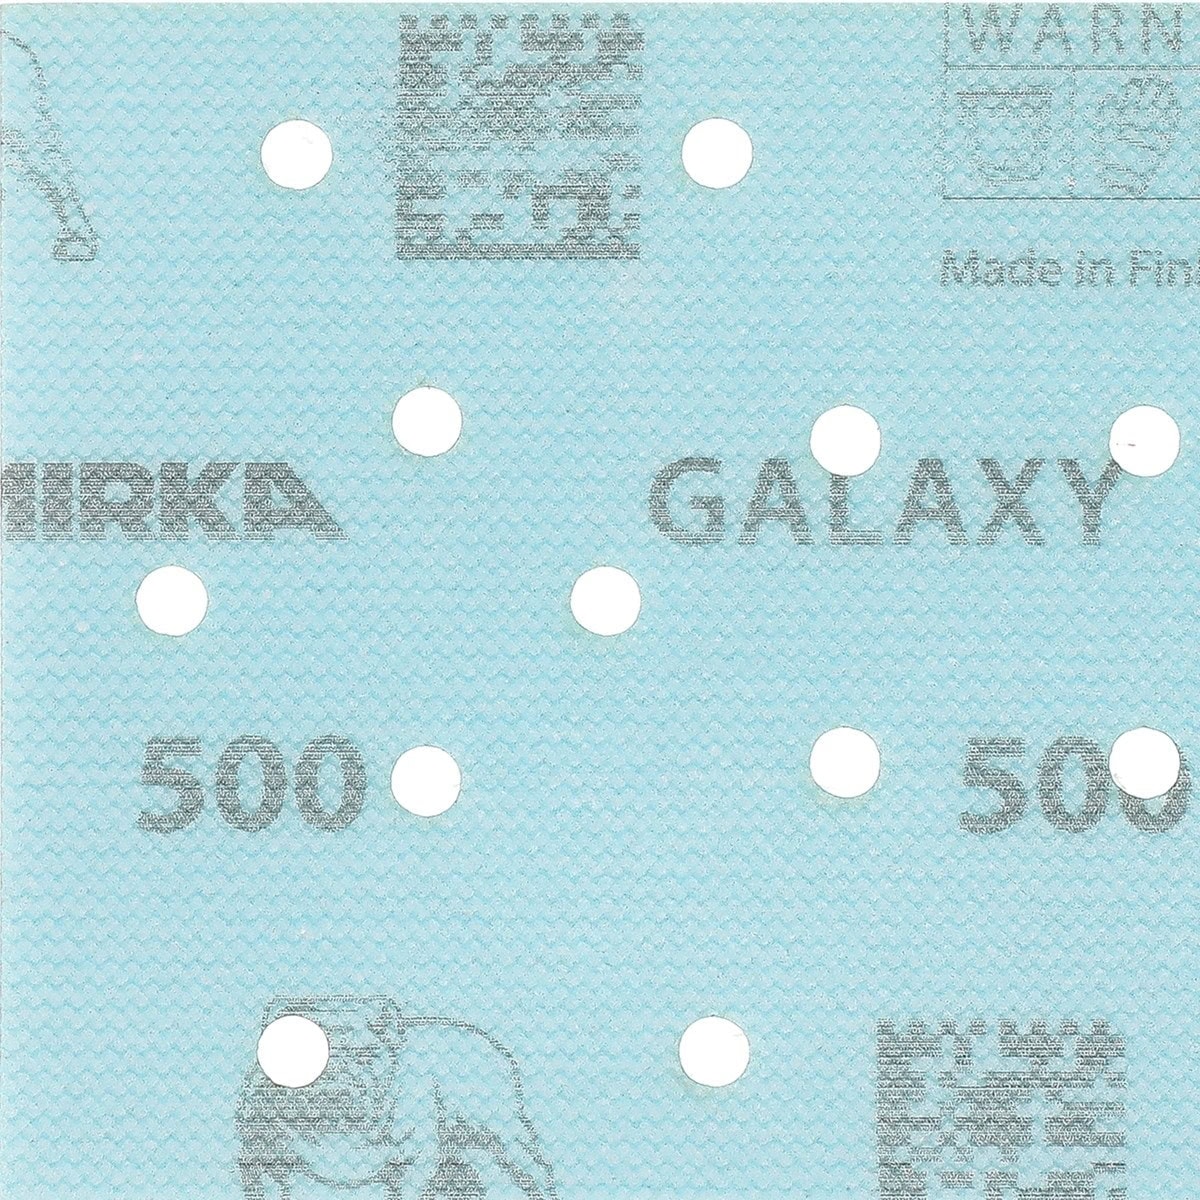 Mirka® Galaxy FY6BK05040, 81 mm x 133 mm, P40, Multilochung, Kletthaftend, Multifit™ Technologie, Schleifstreifen mit Präzisions-Keramik- & Aluminiumkorn